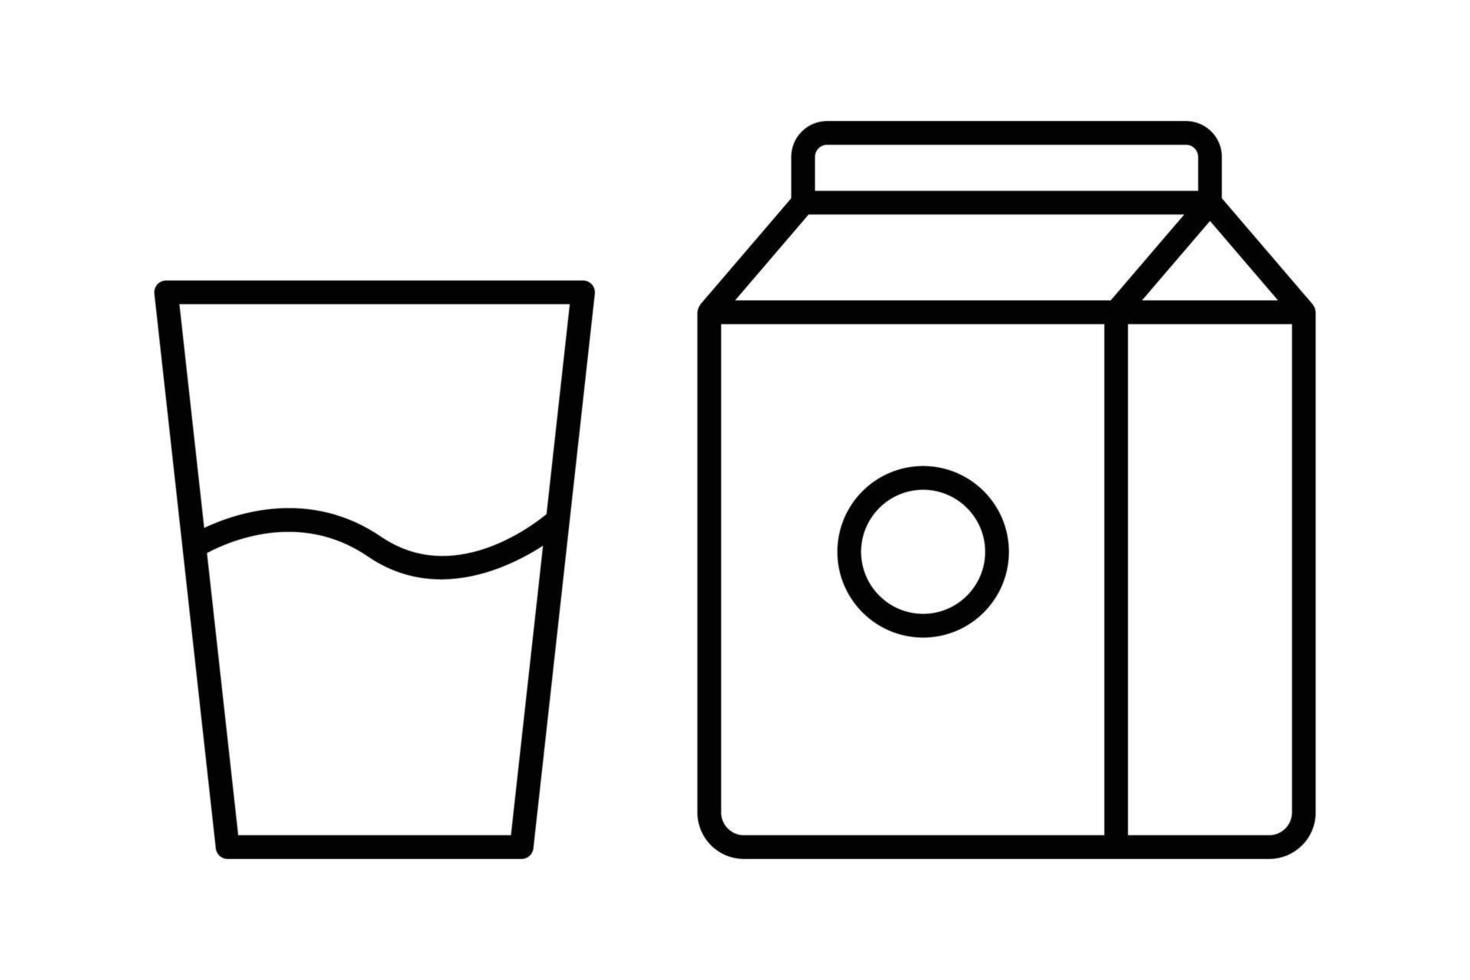 Breakfast icon illustration. Milk icon, glass. Line icon style. Simple vector design editable